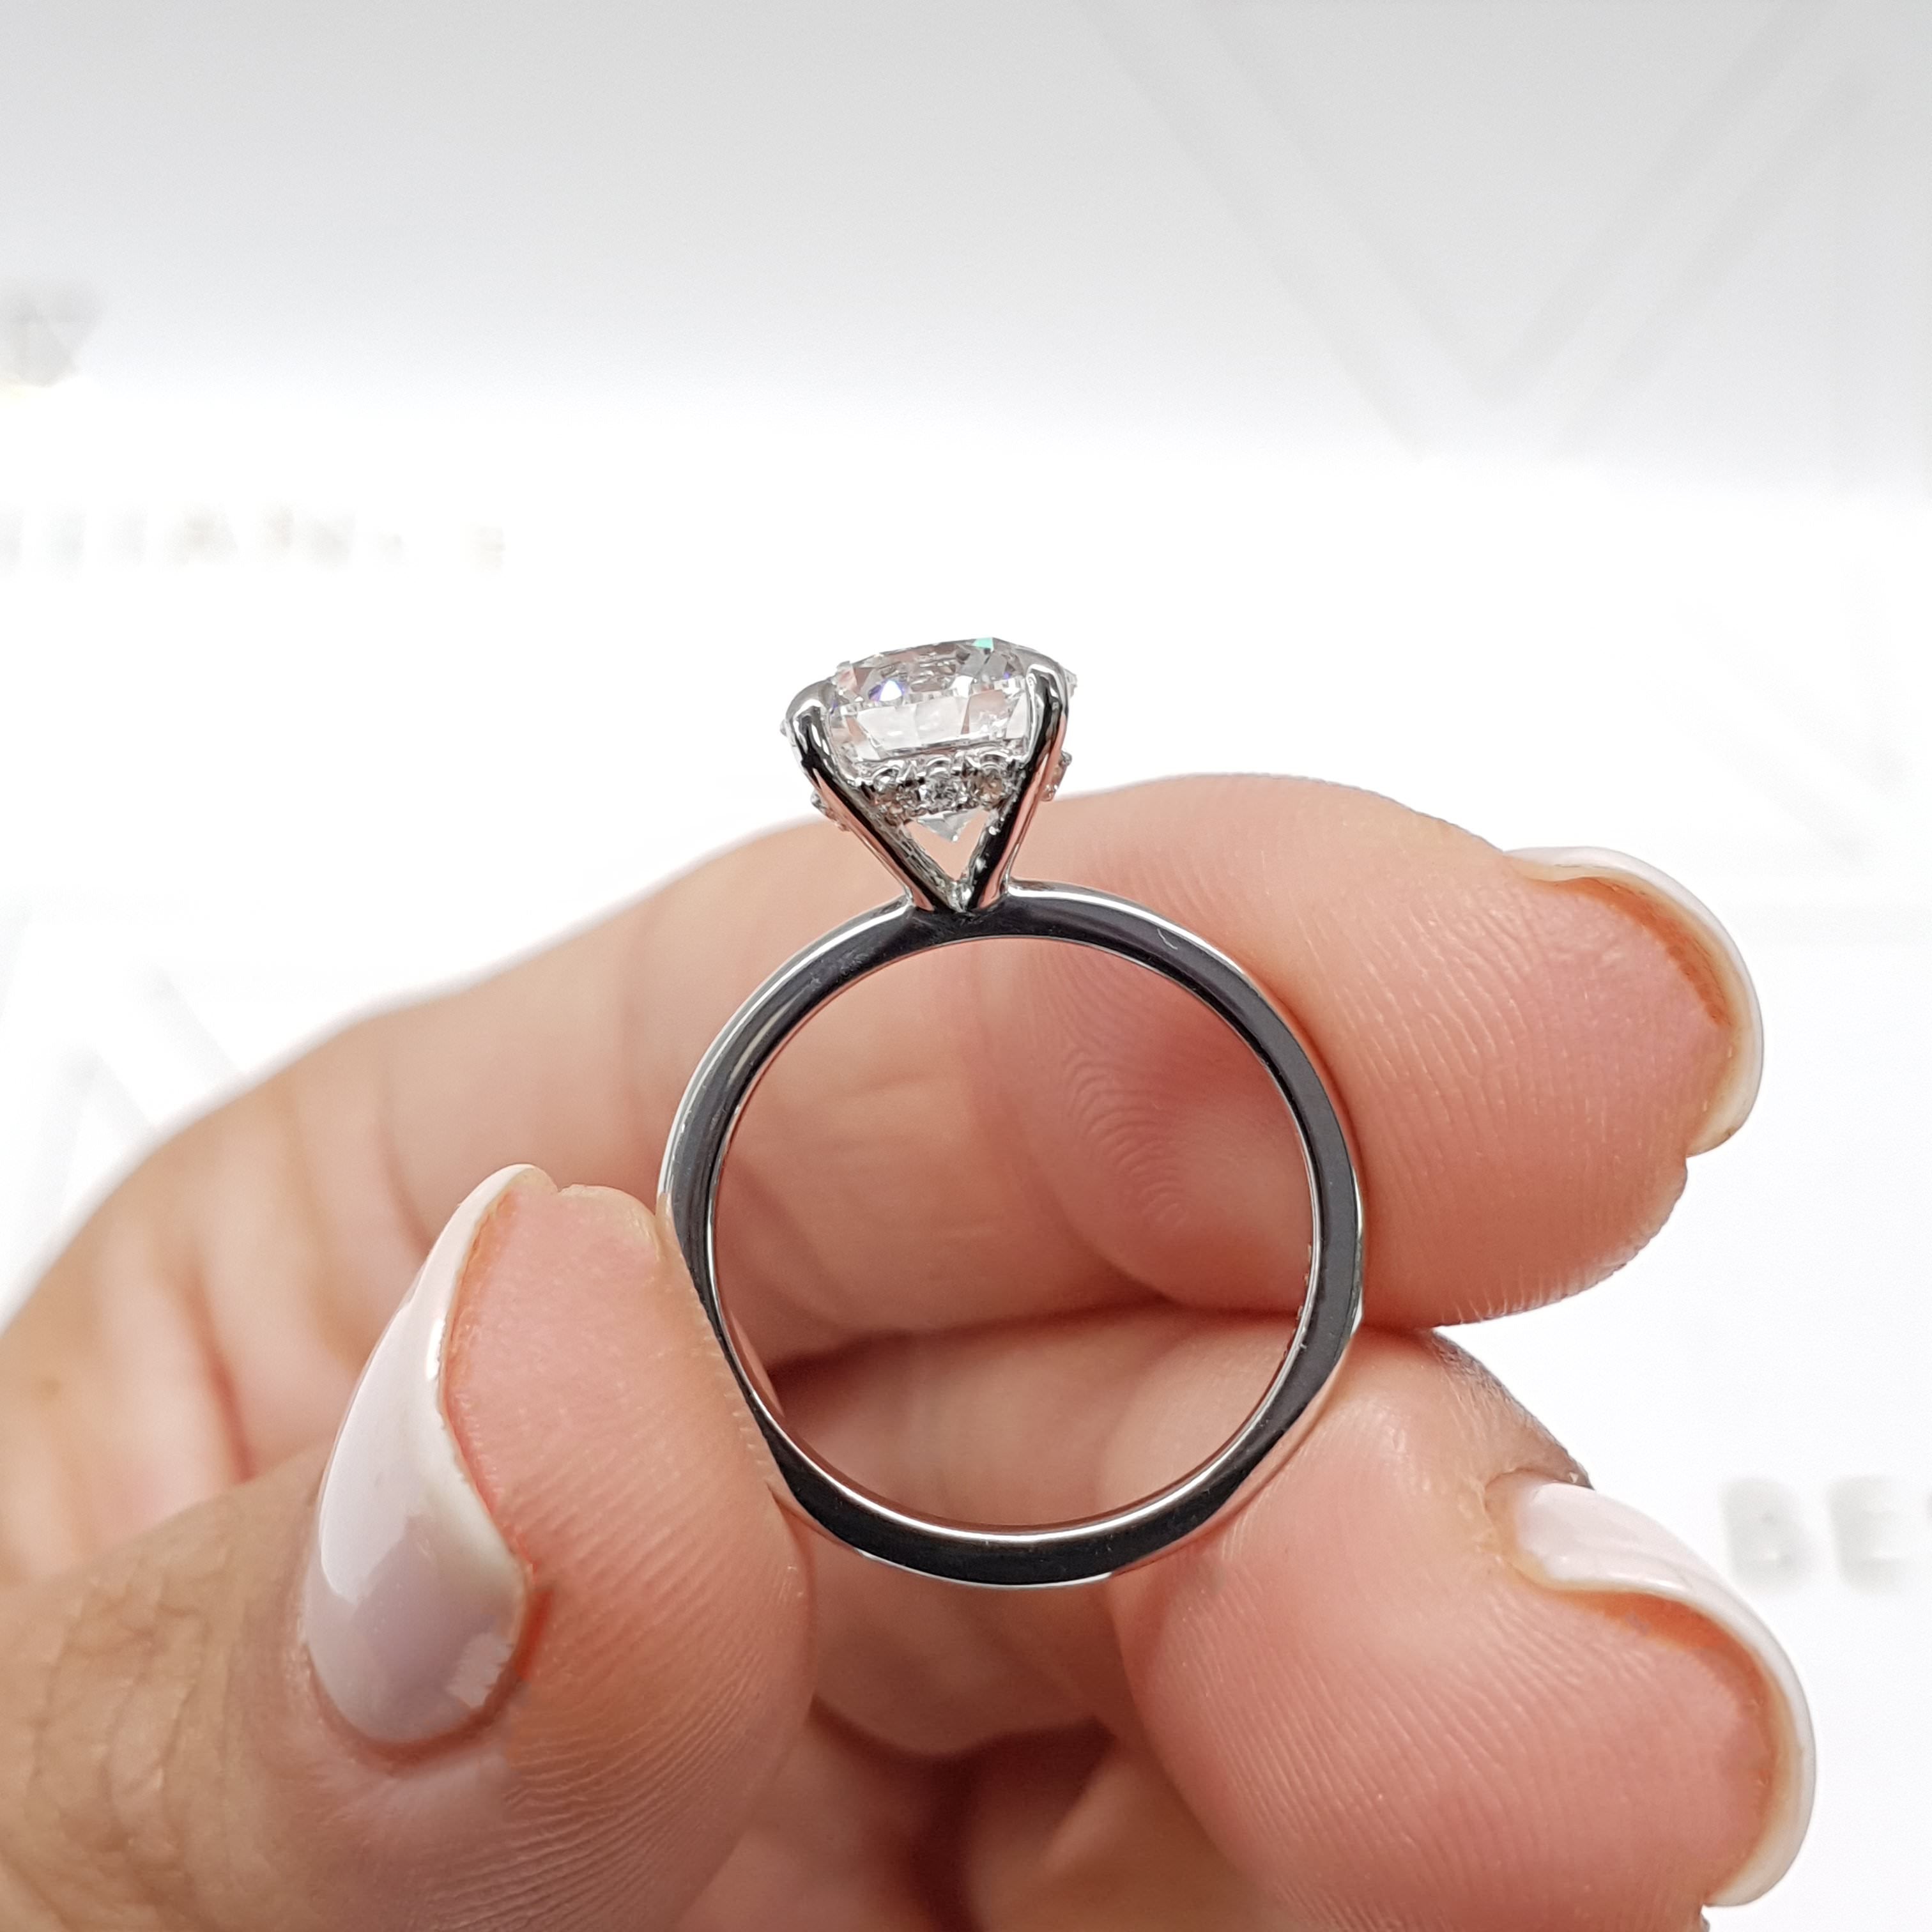 Cynthia Diamond Engagement Ring   (2.1 Carat) -Platinum